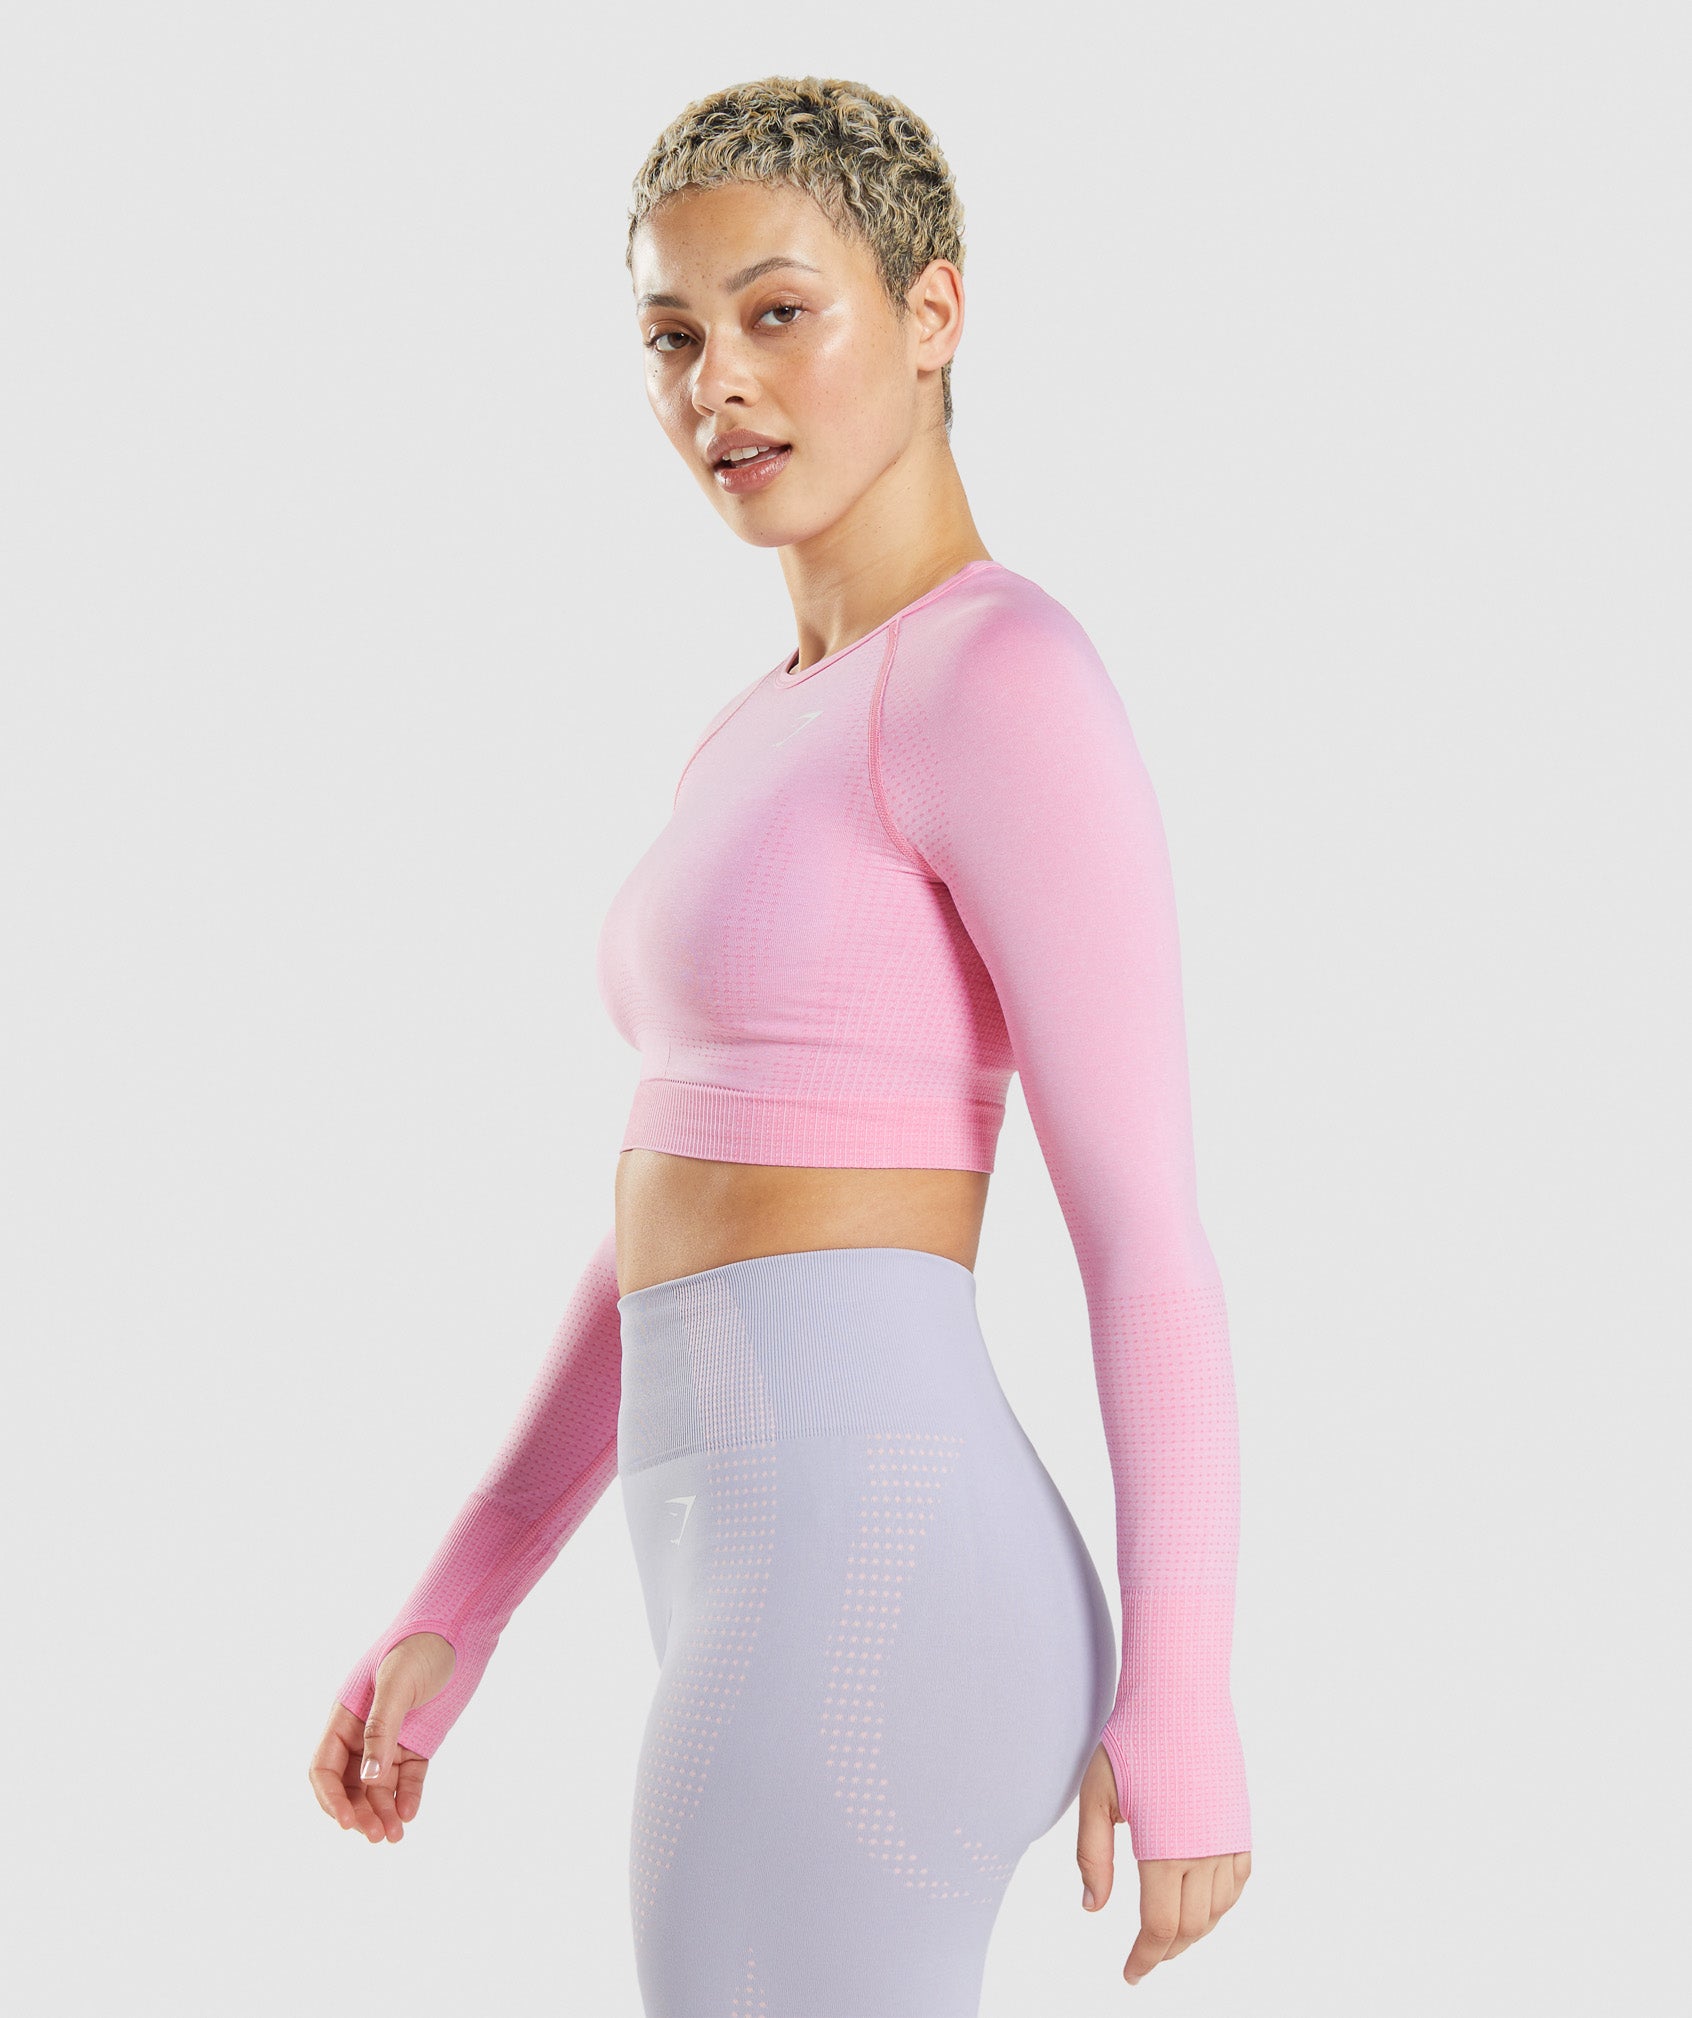 Gymshark Flex Crop Top Capri Pant Workout Set Women's Size XS Beet Pink 2  Piece